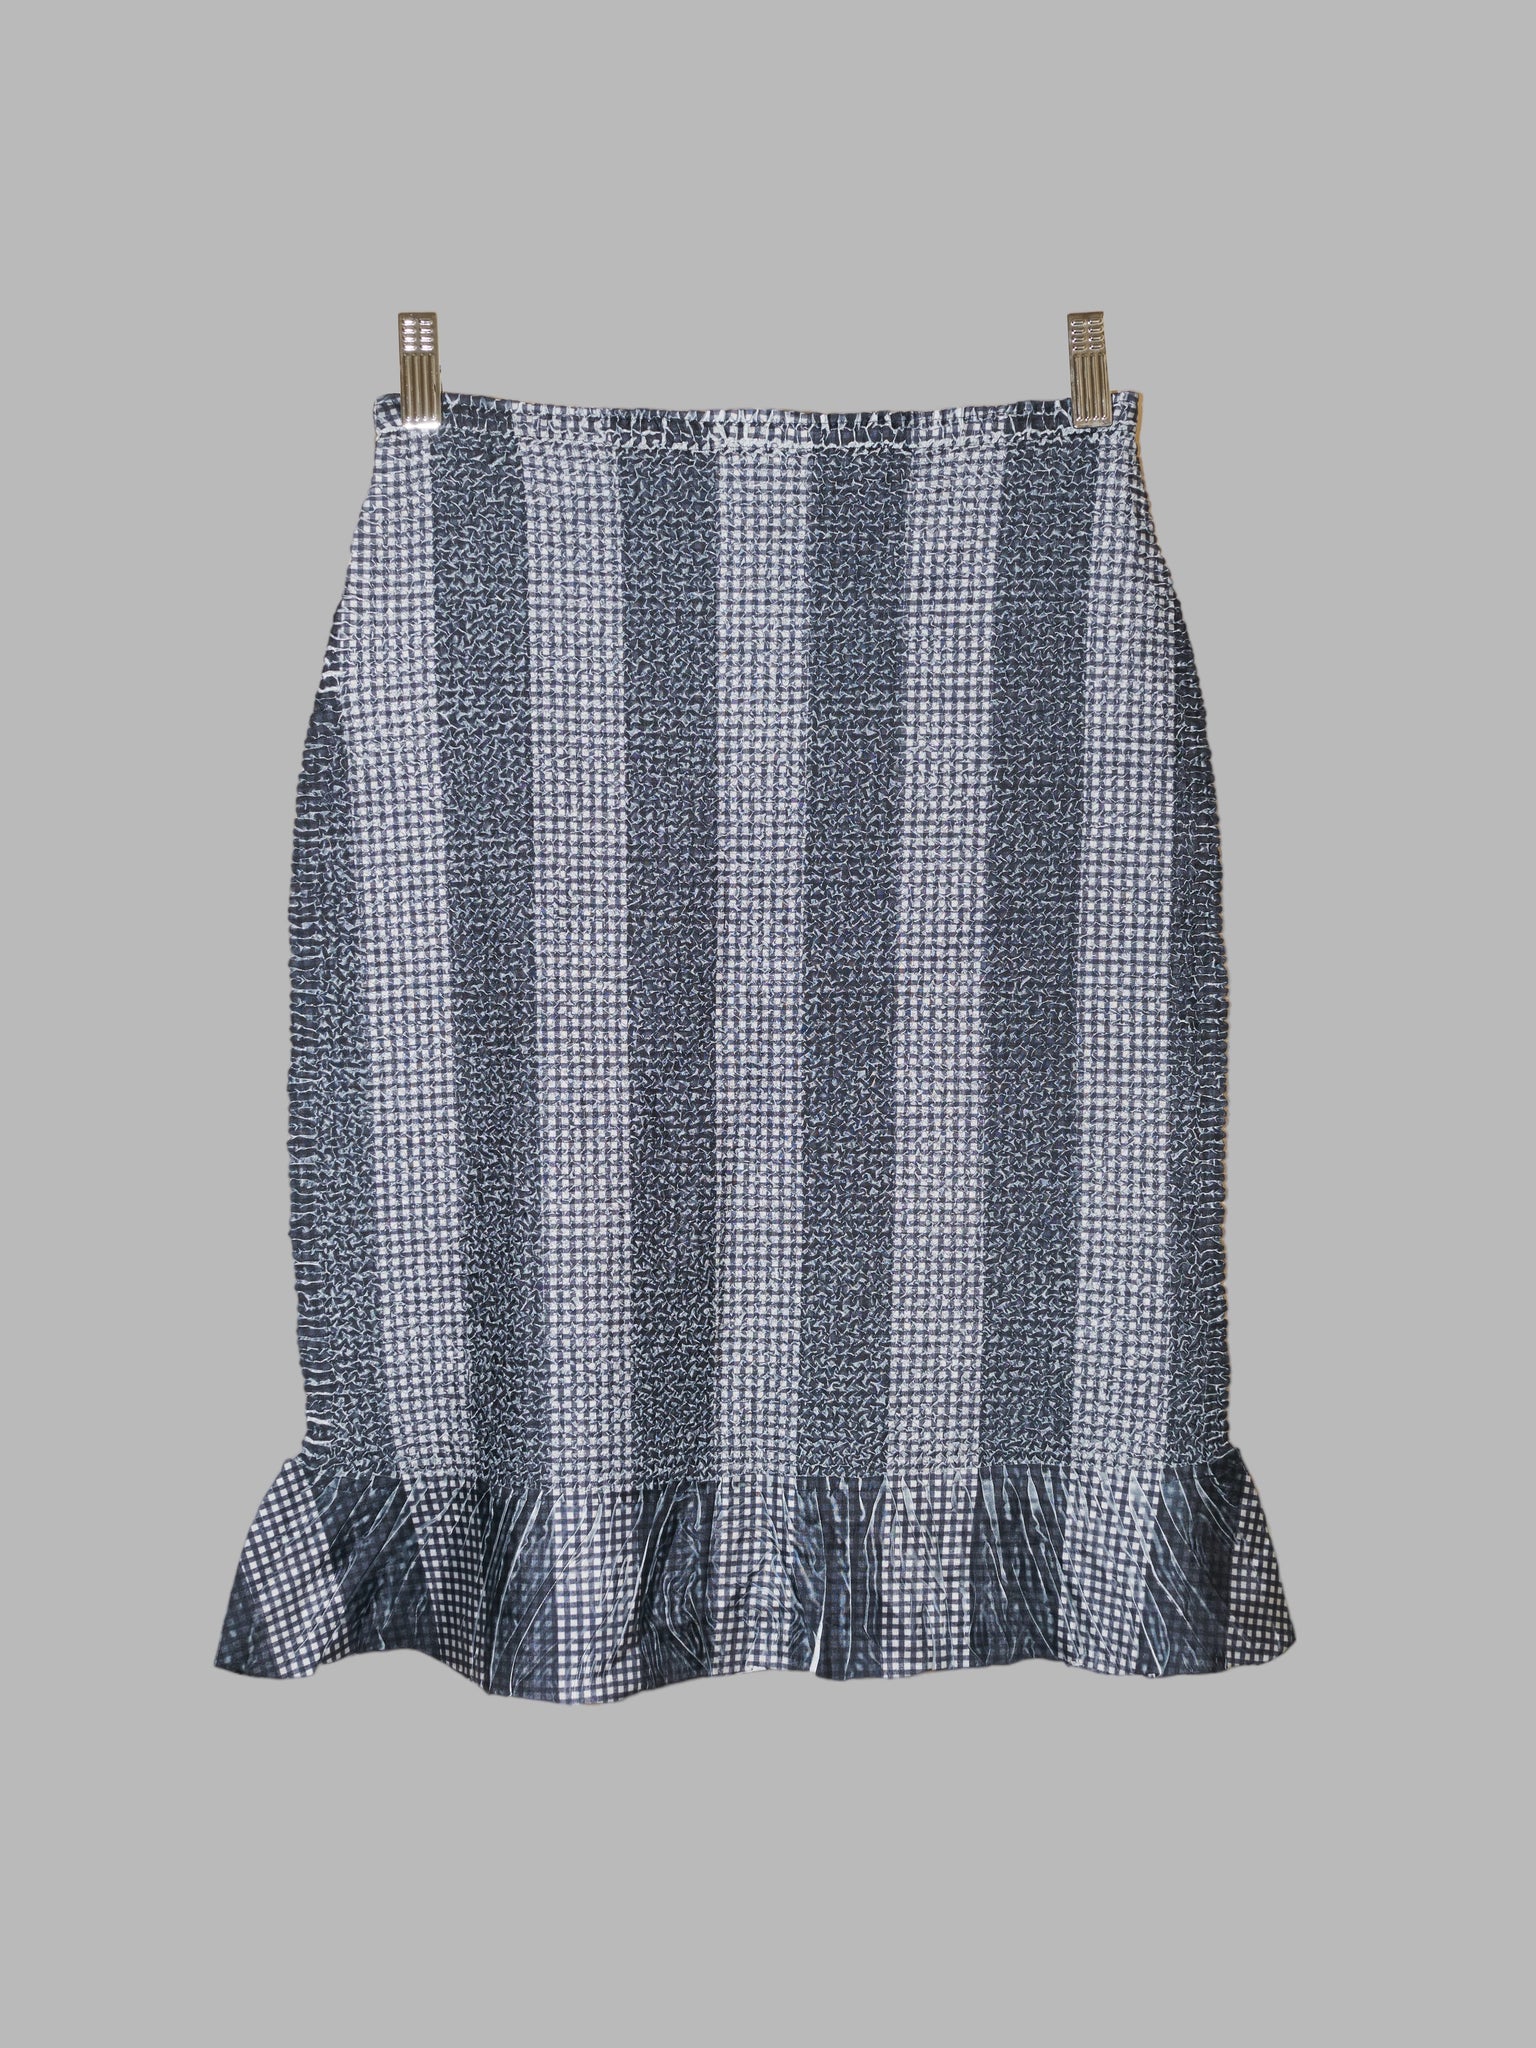 Yoshiki Hishinuma 1990s grey gingham stripe creased polyester skirt - size 1 S